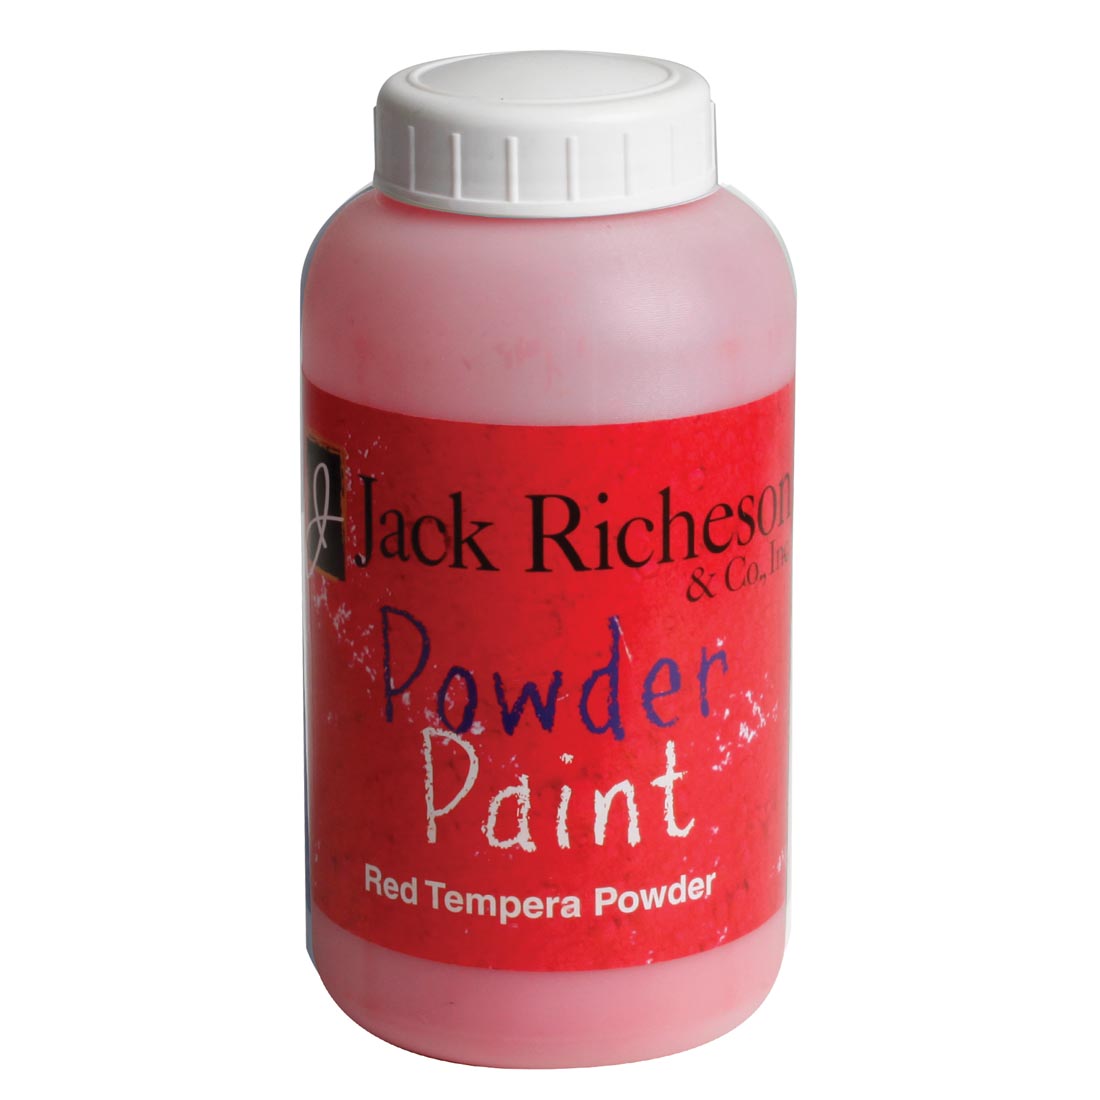 Jack Richeson Red Tempera Powder Paint